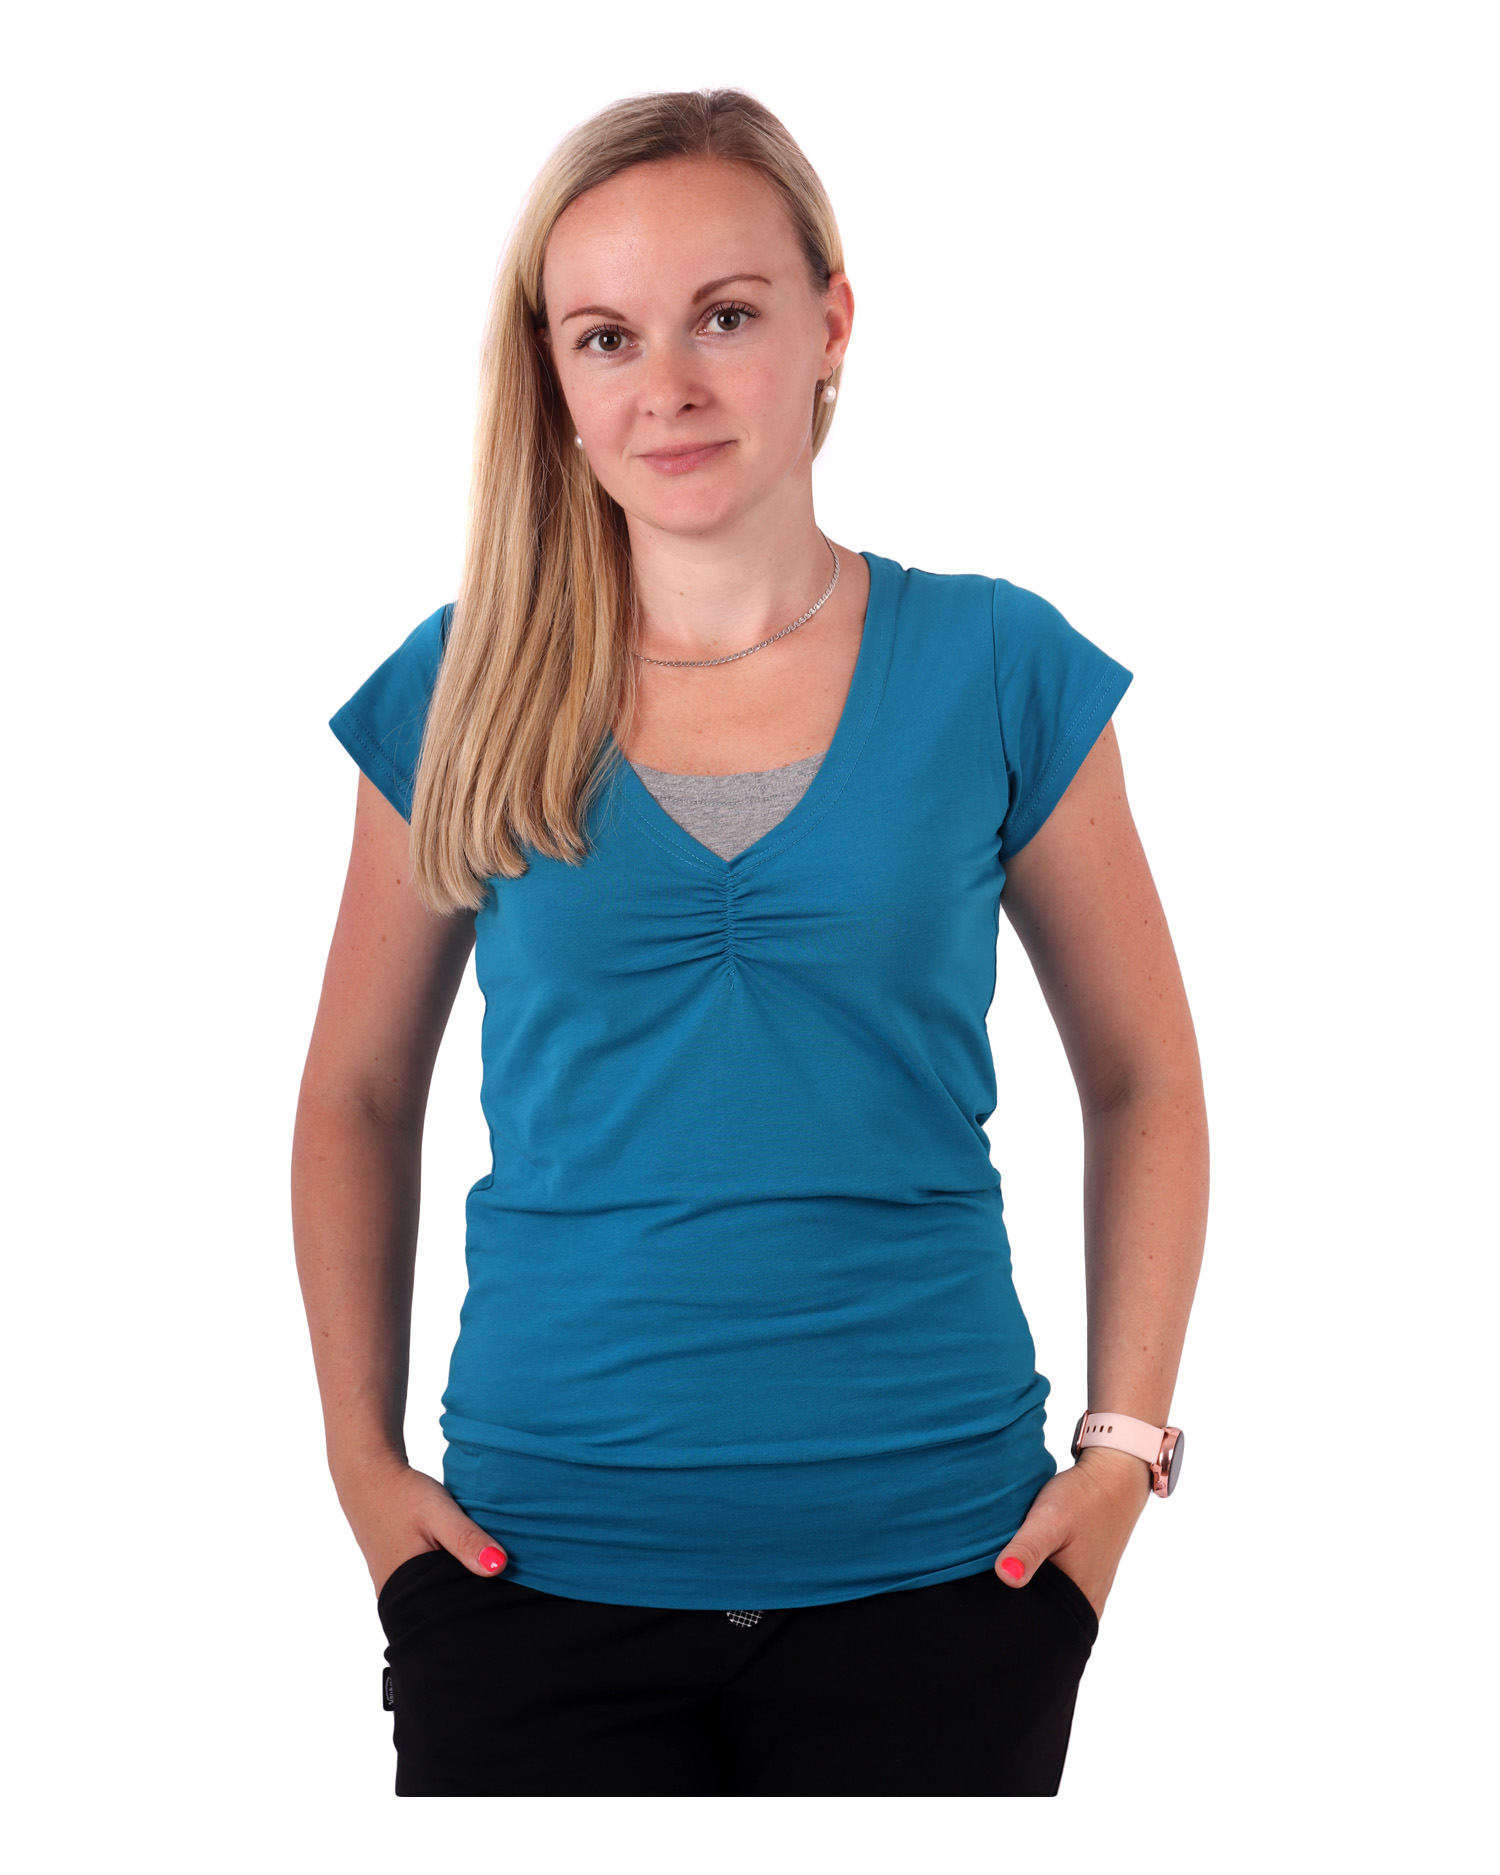 Breast-feeding T-shirt Lea, short sleeves, dark turquoise